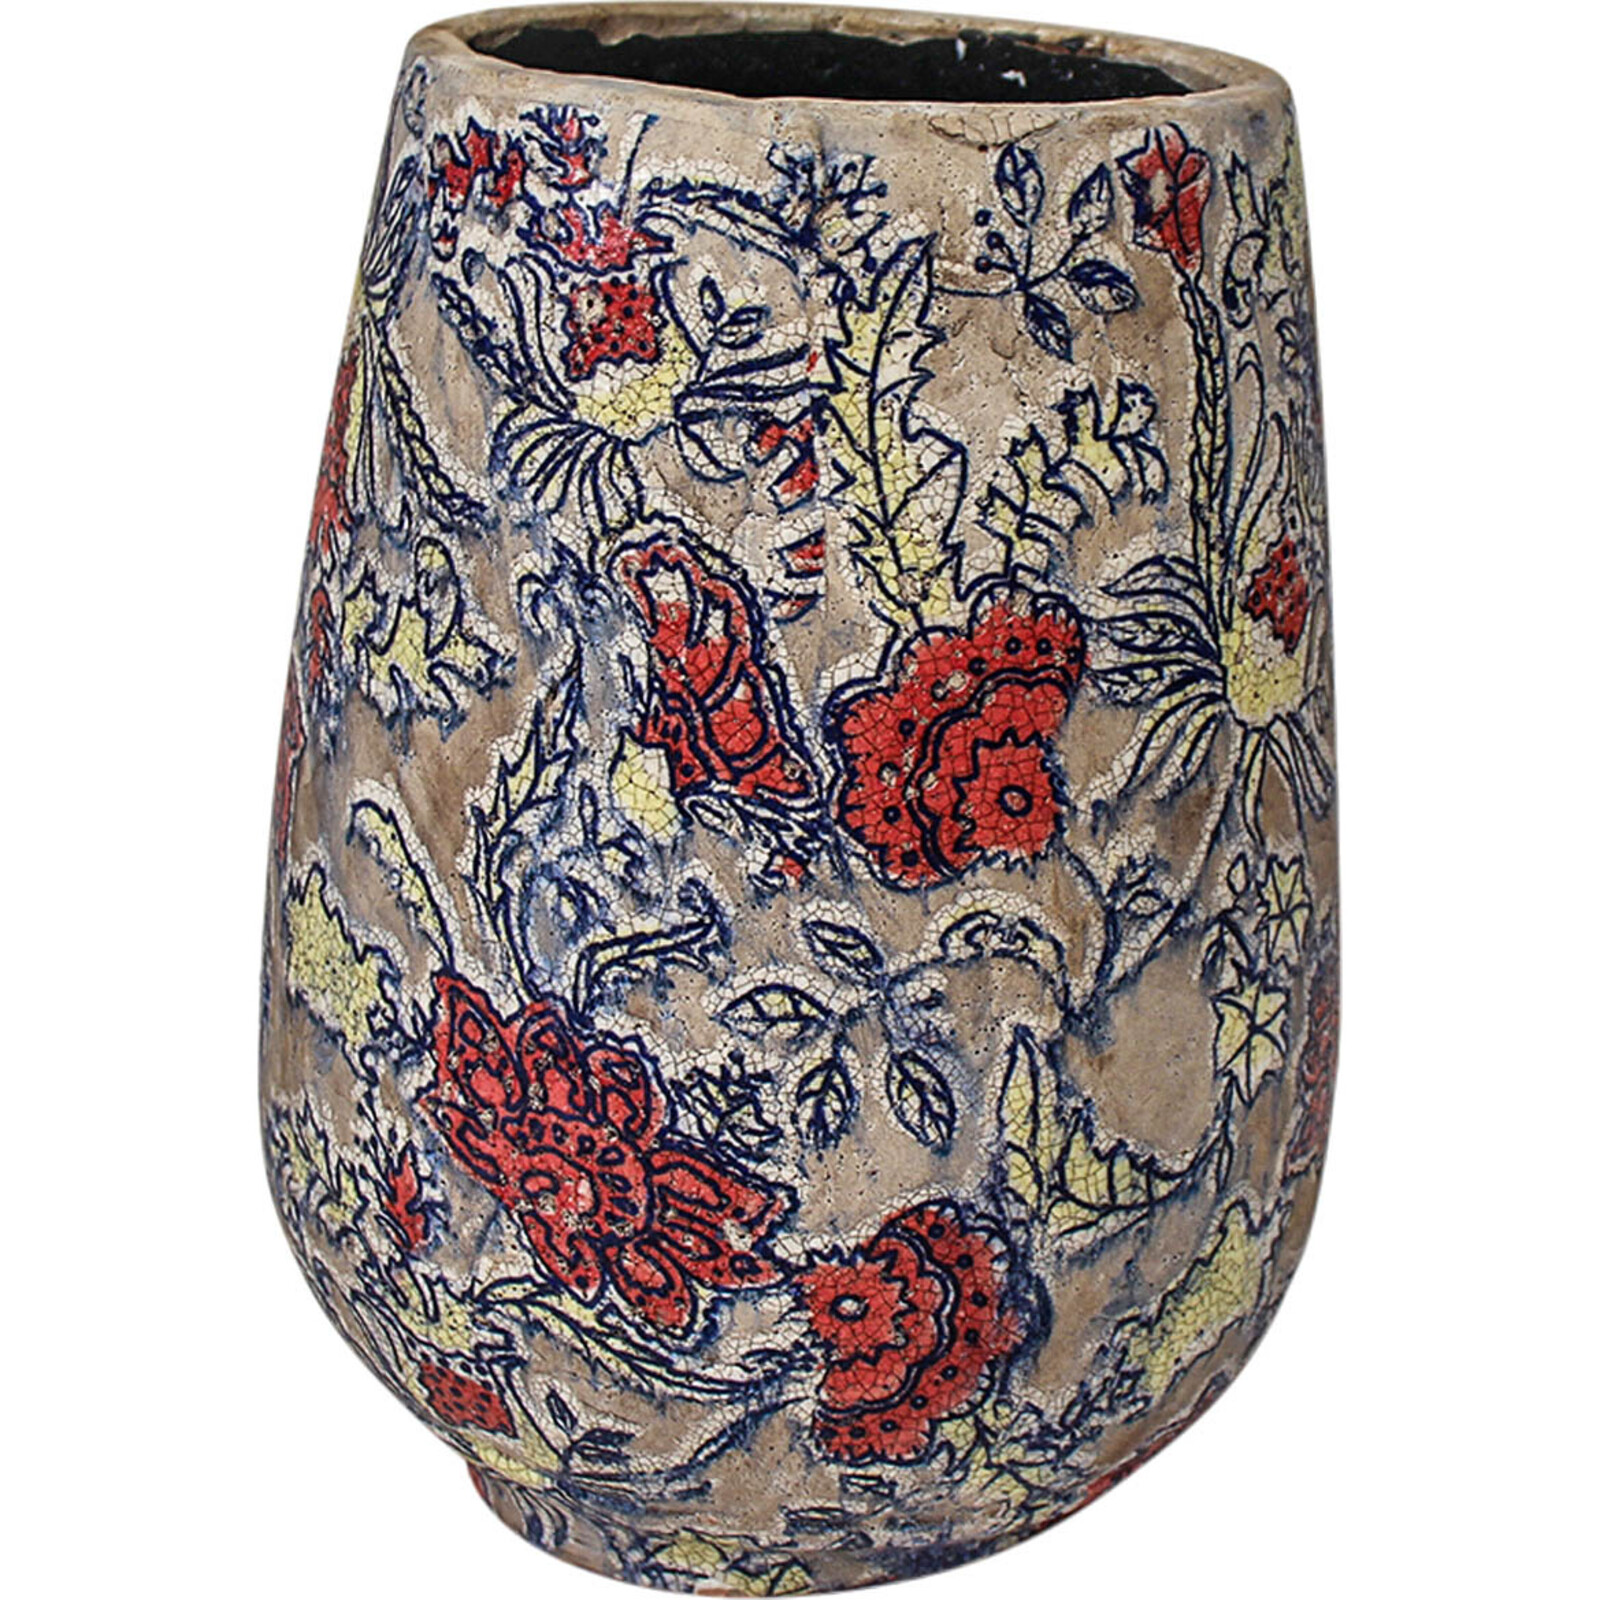 Vase Floral Textured